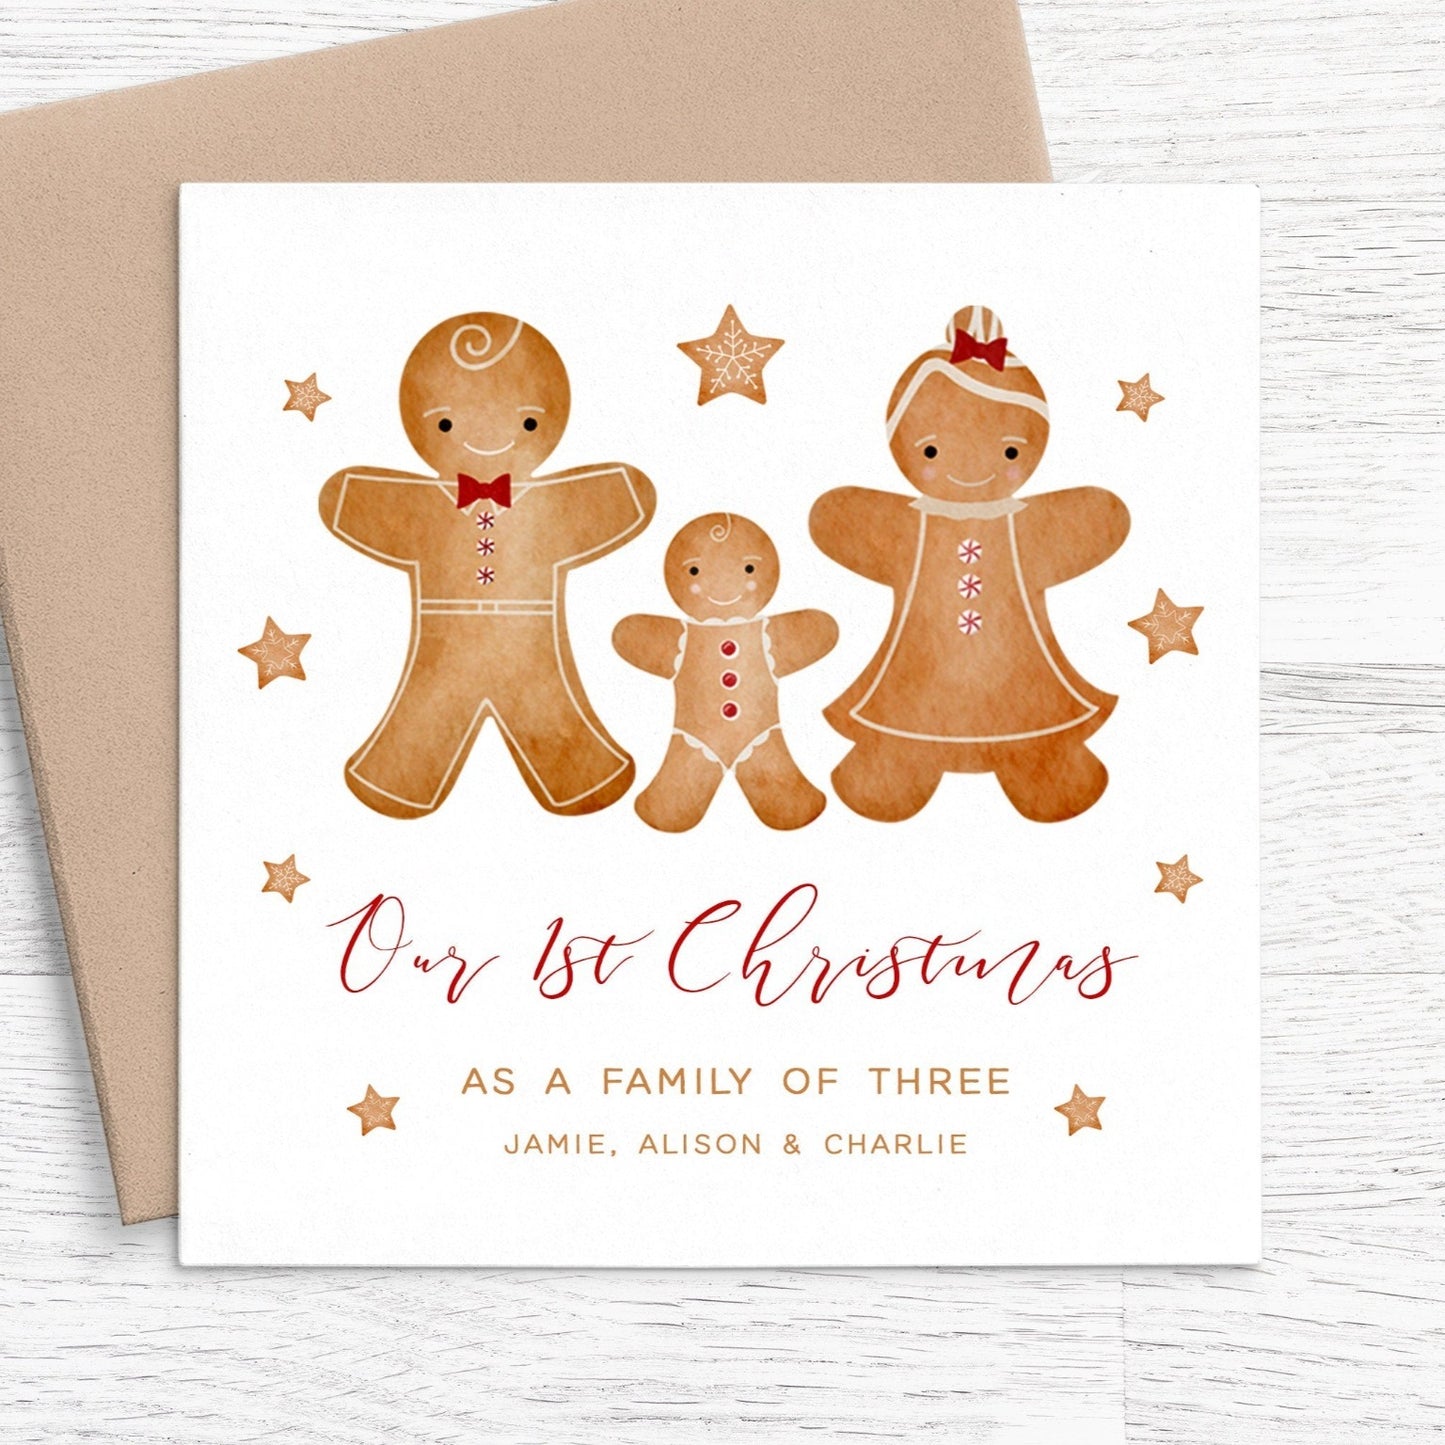 gingerbread happy 1st christmas as family of 3 card personalised kraft brown envelope matte white cardstock